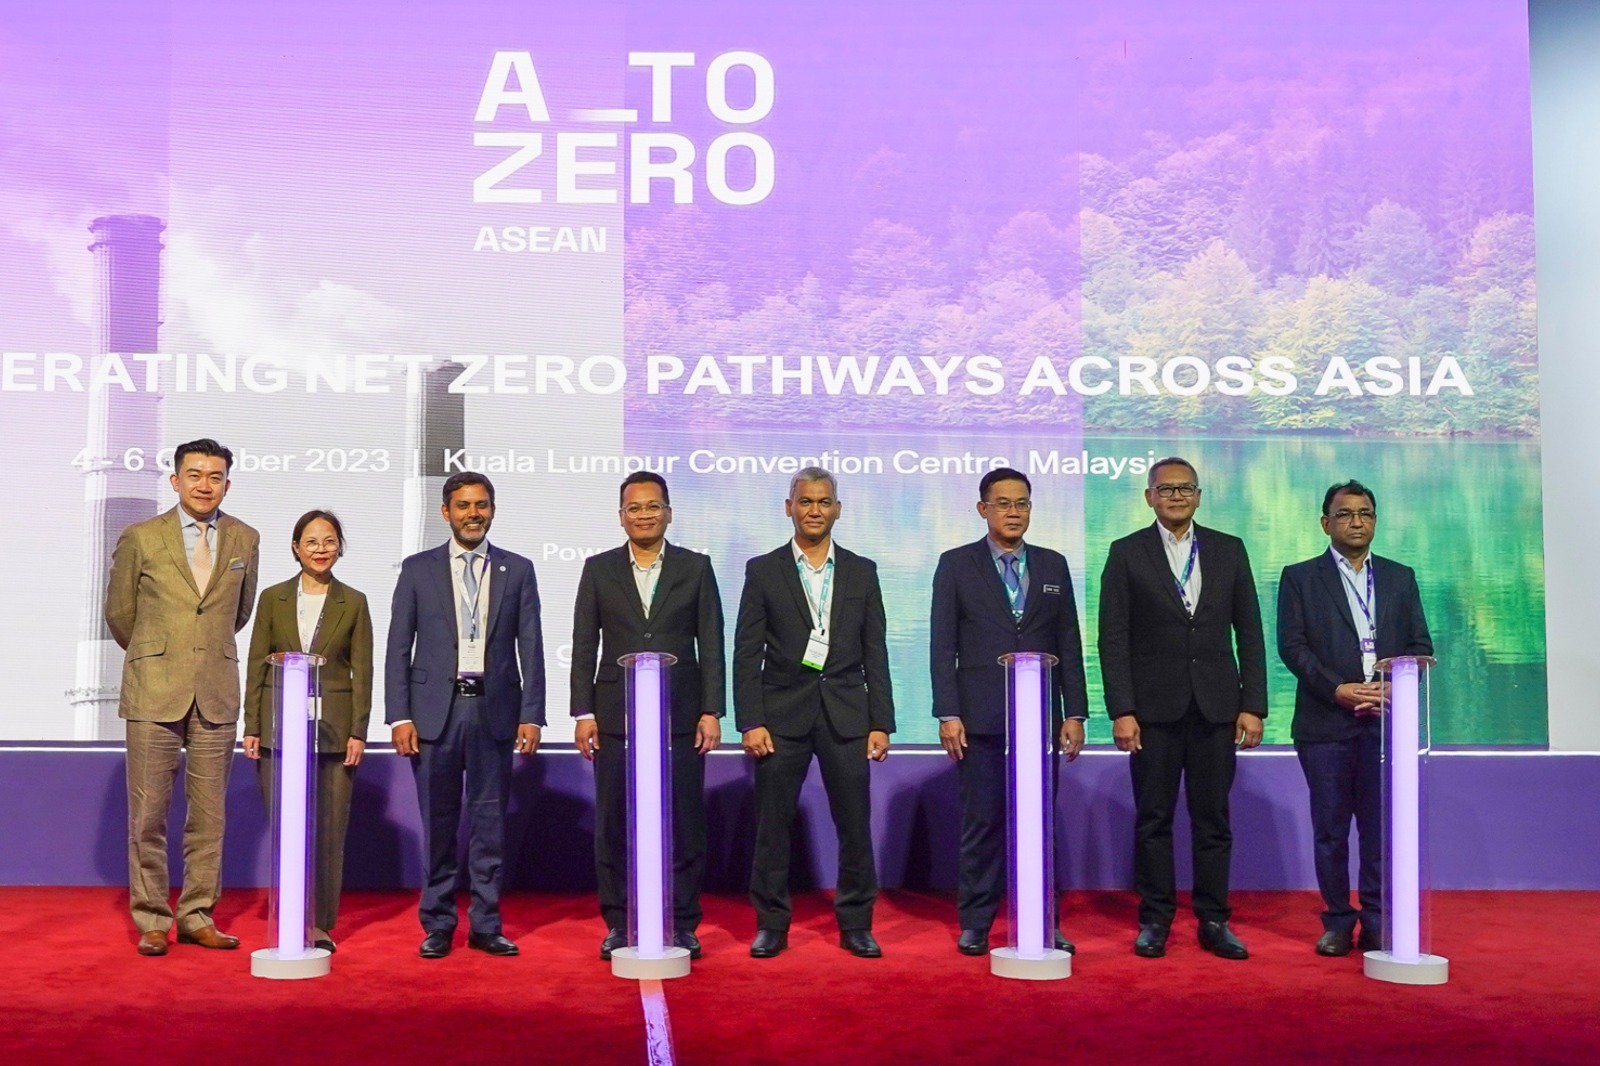 ATOZERO ASEAN 2023 – A STELLAR SUCCESS